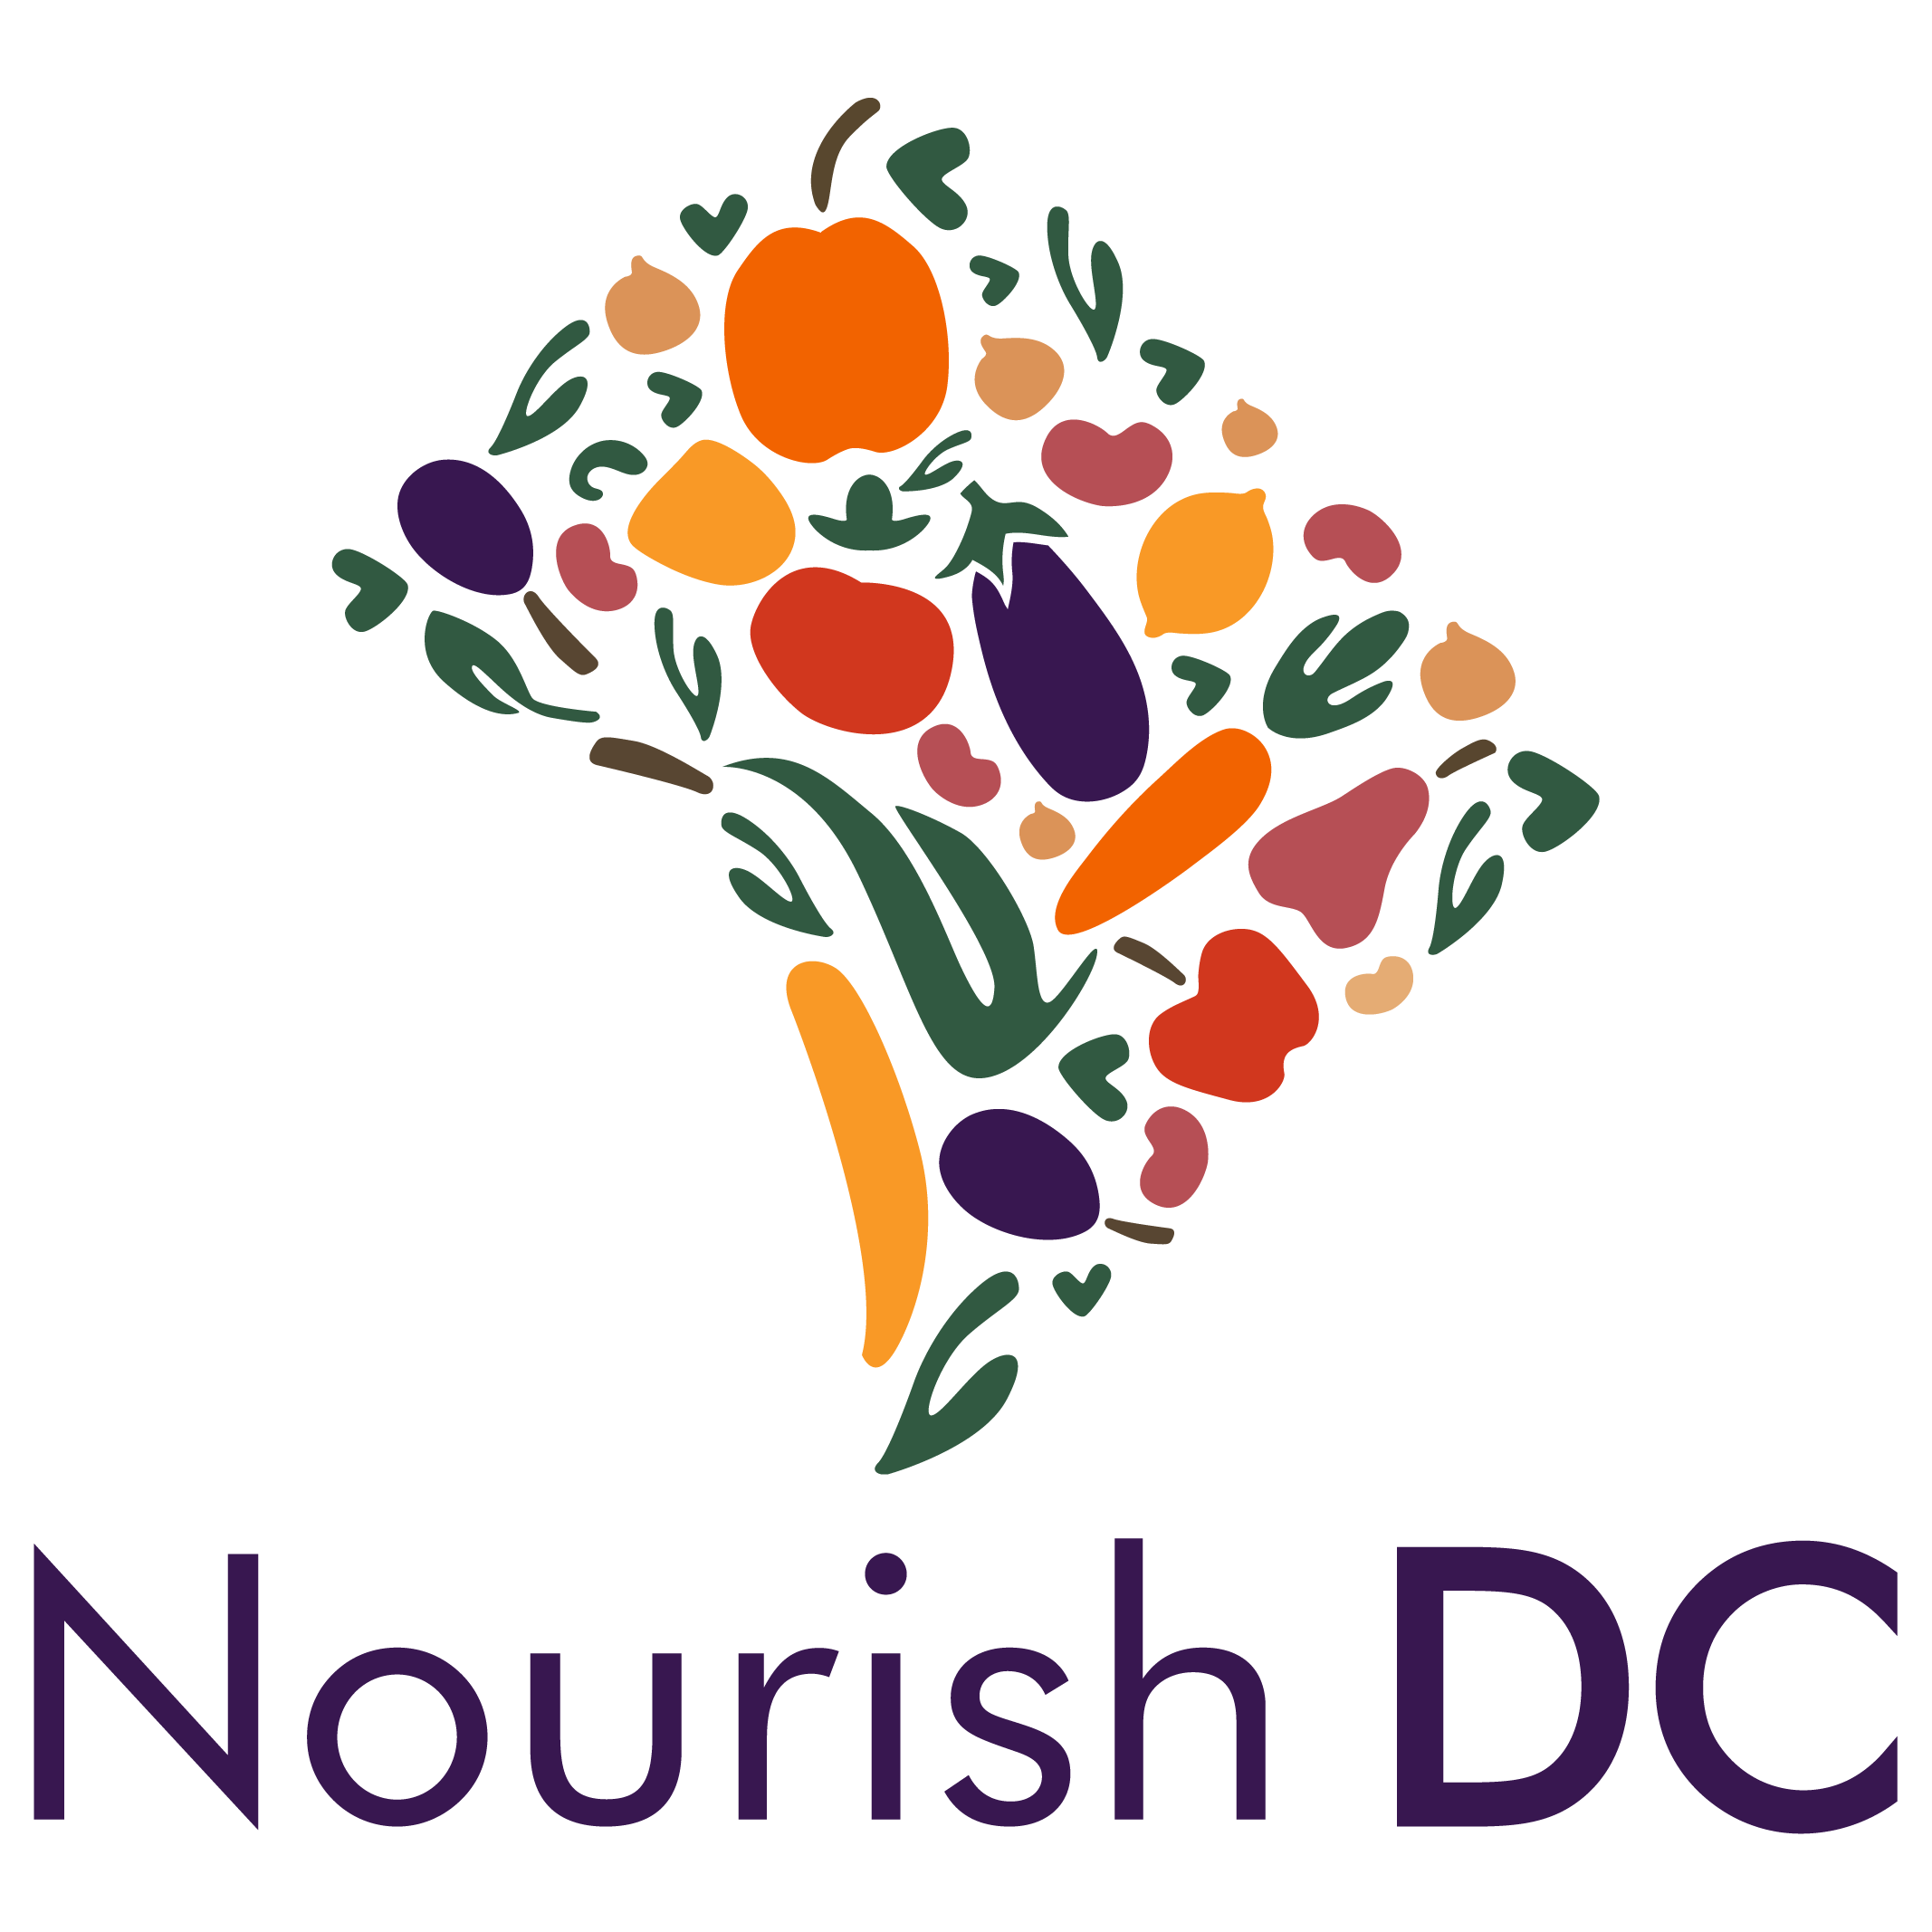 The Nourish DC logo